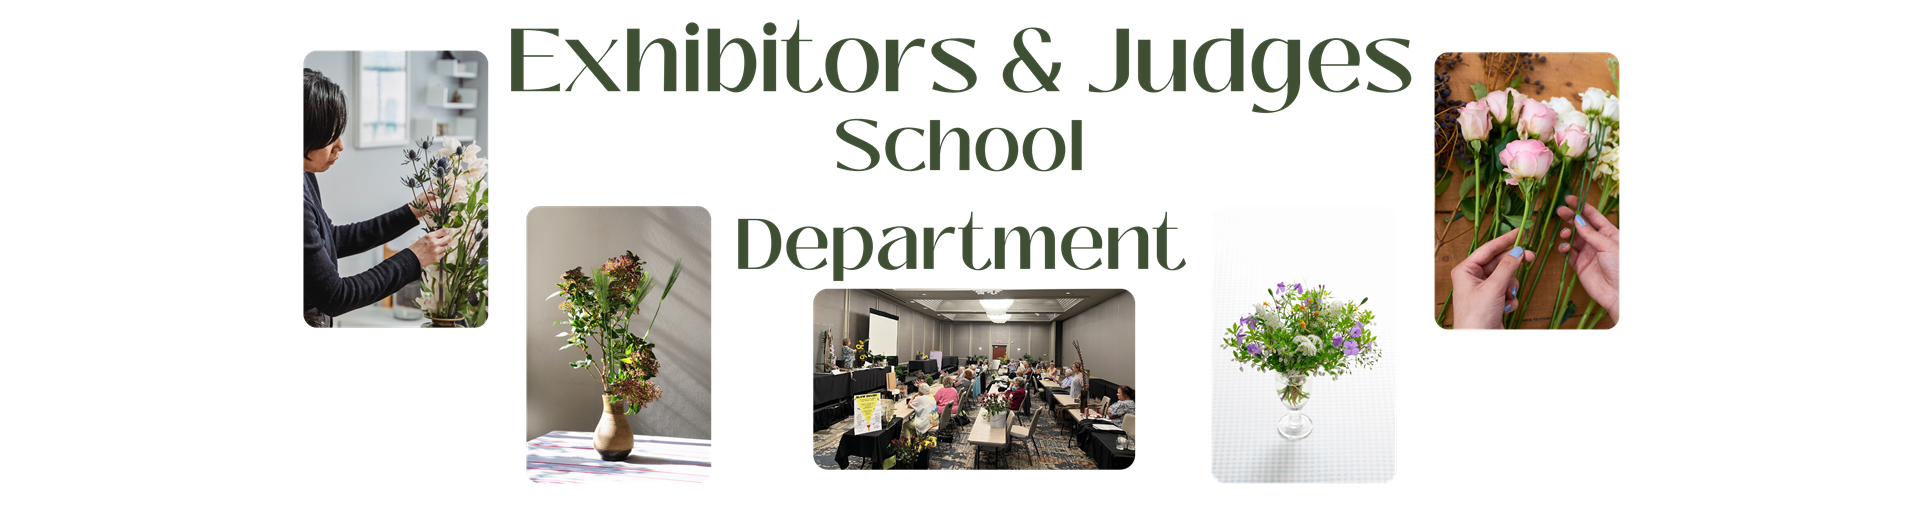 Exhibitors and Judges School Department